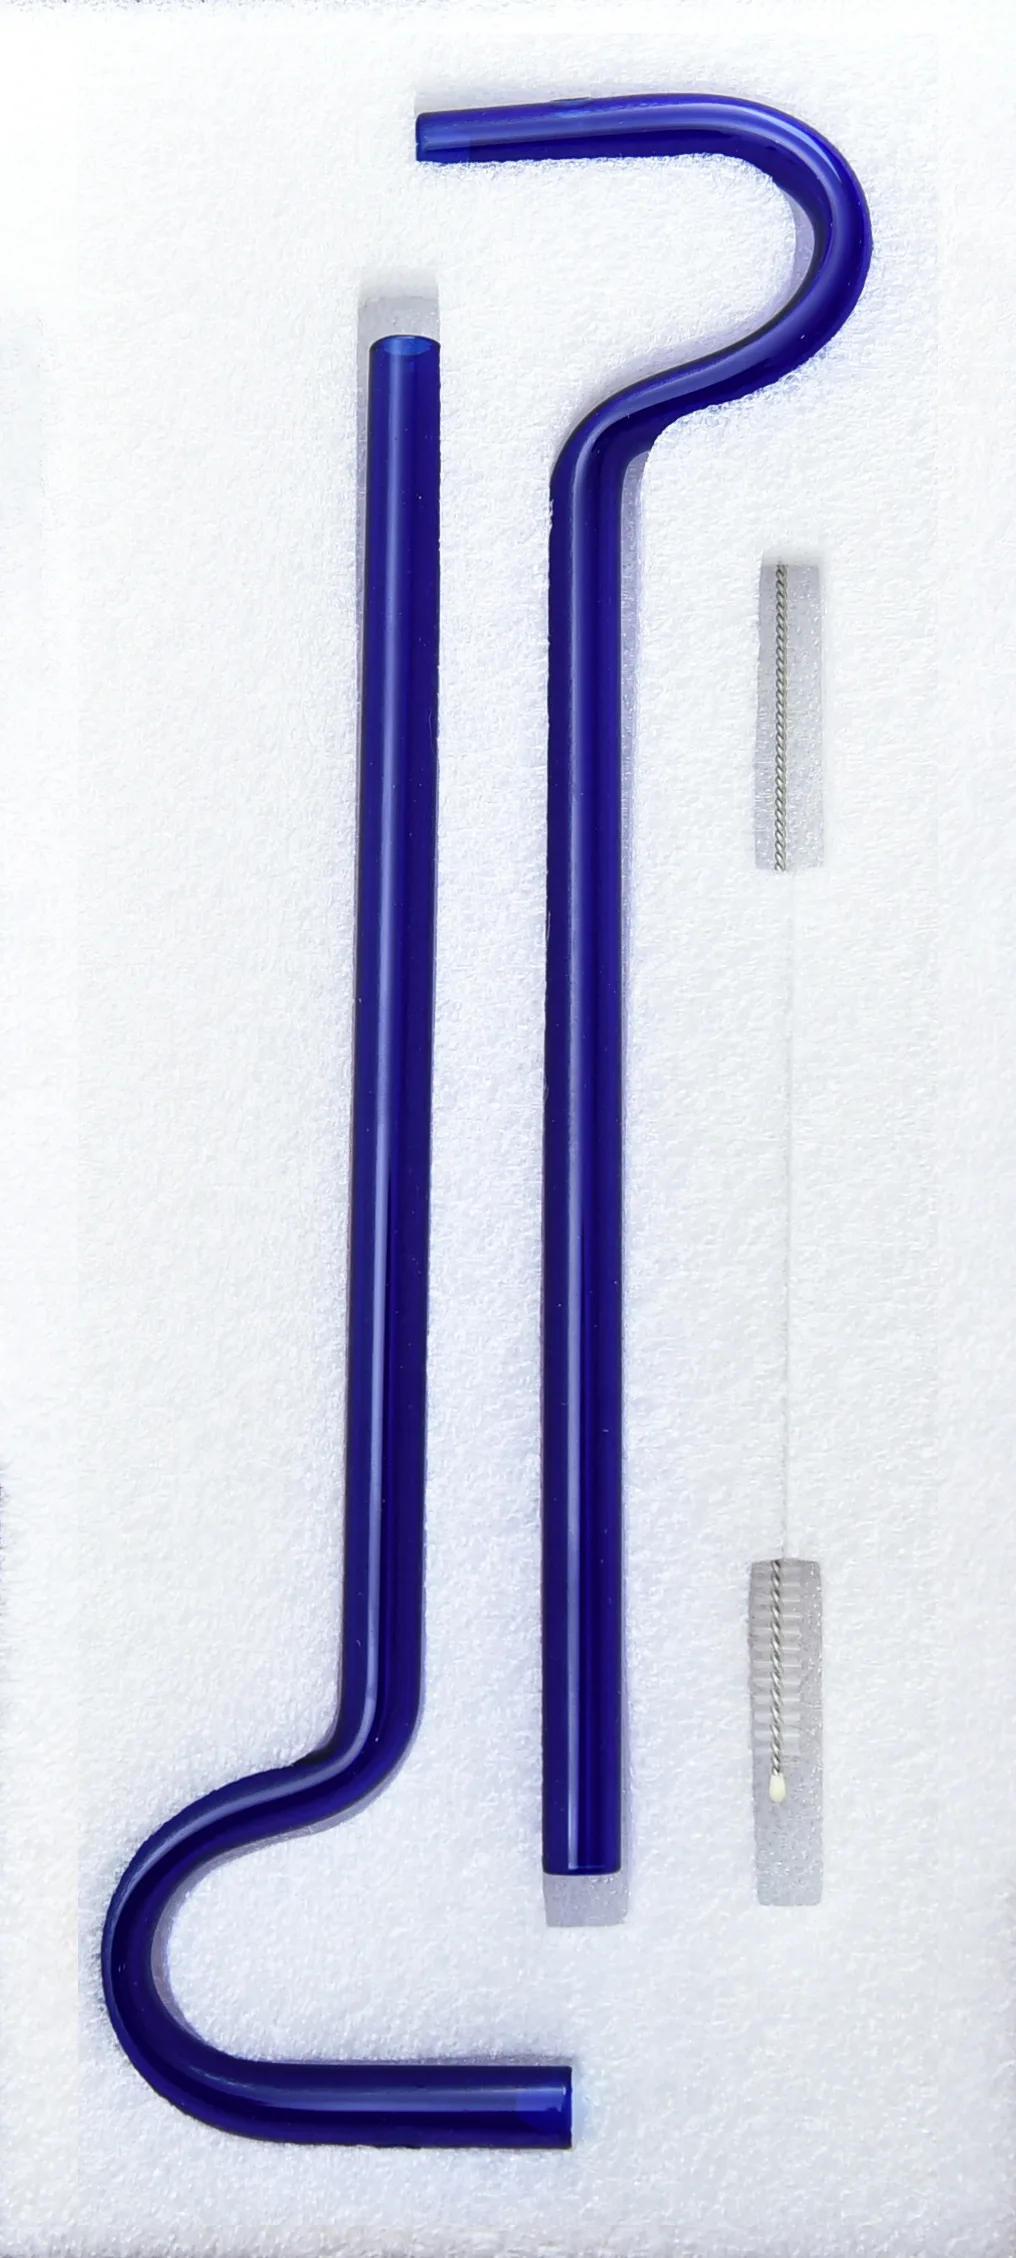 3pcs Anti Wrinkle Straws Reusable Flute Design No Wrinkle Straw